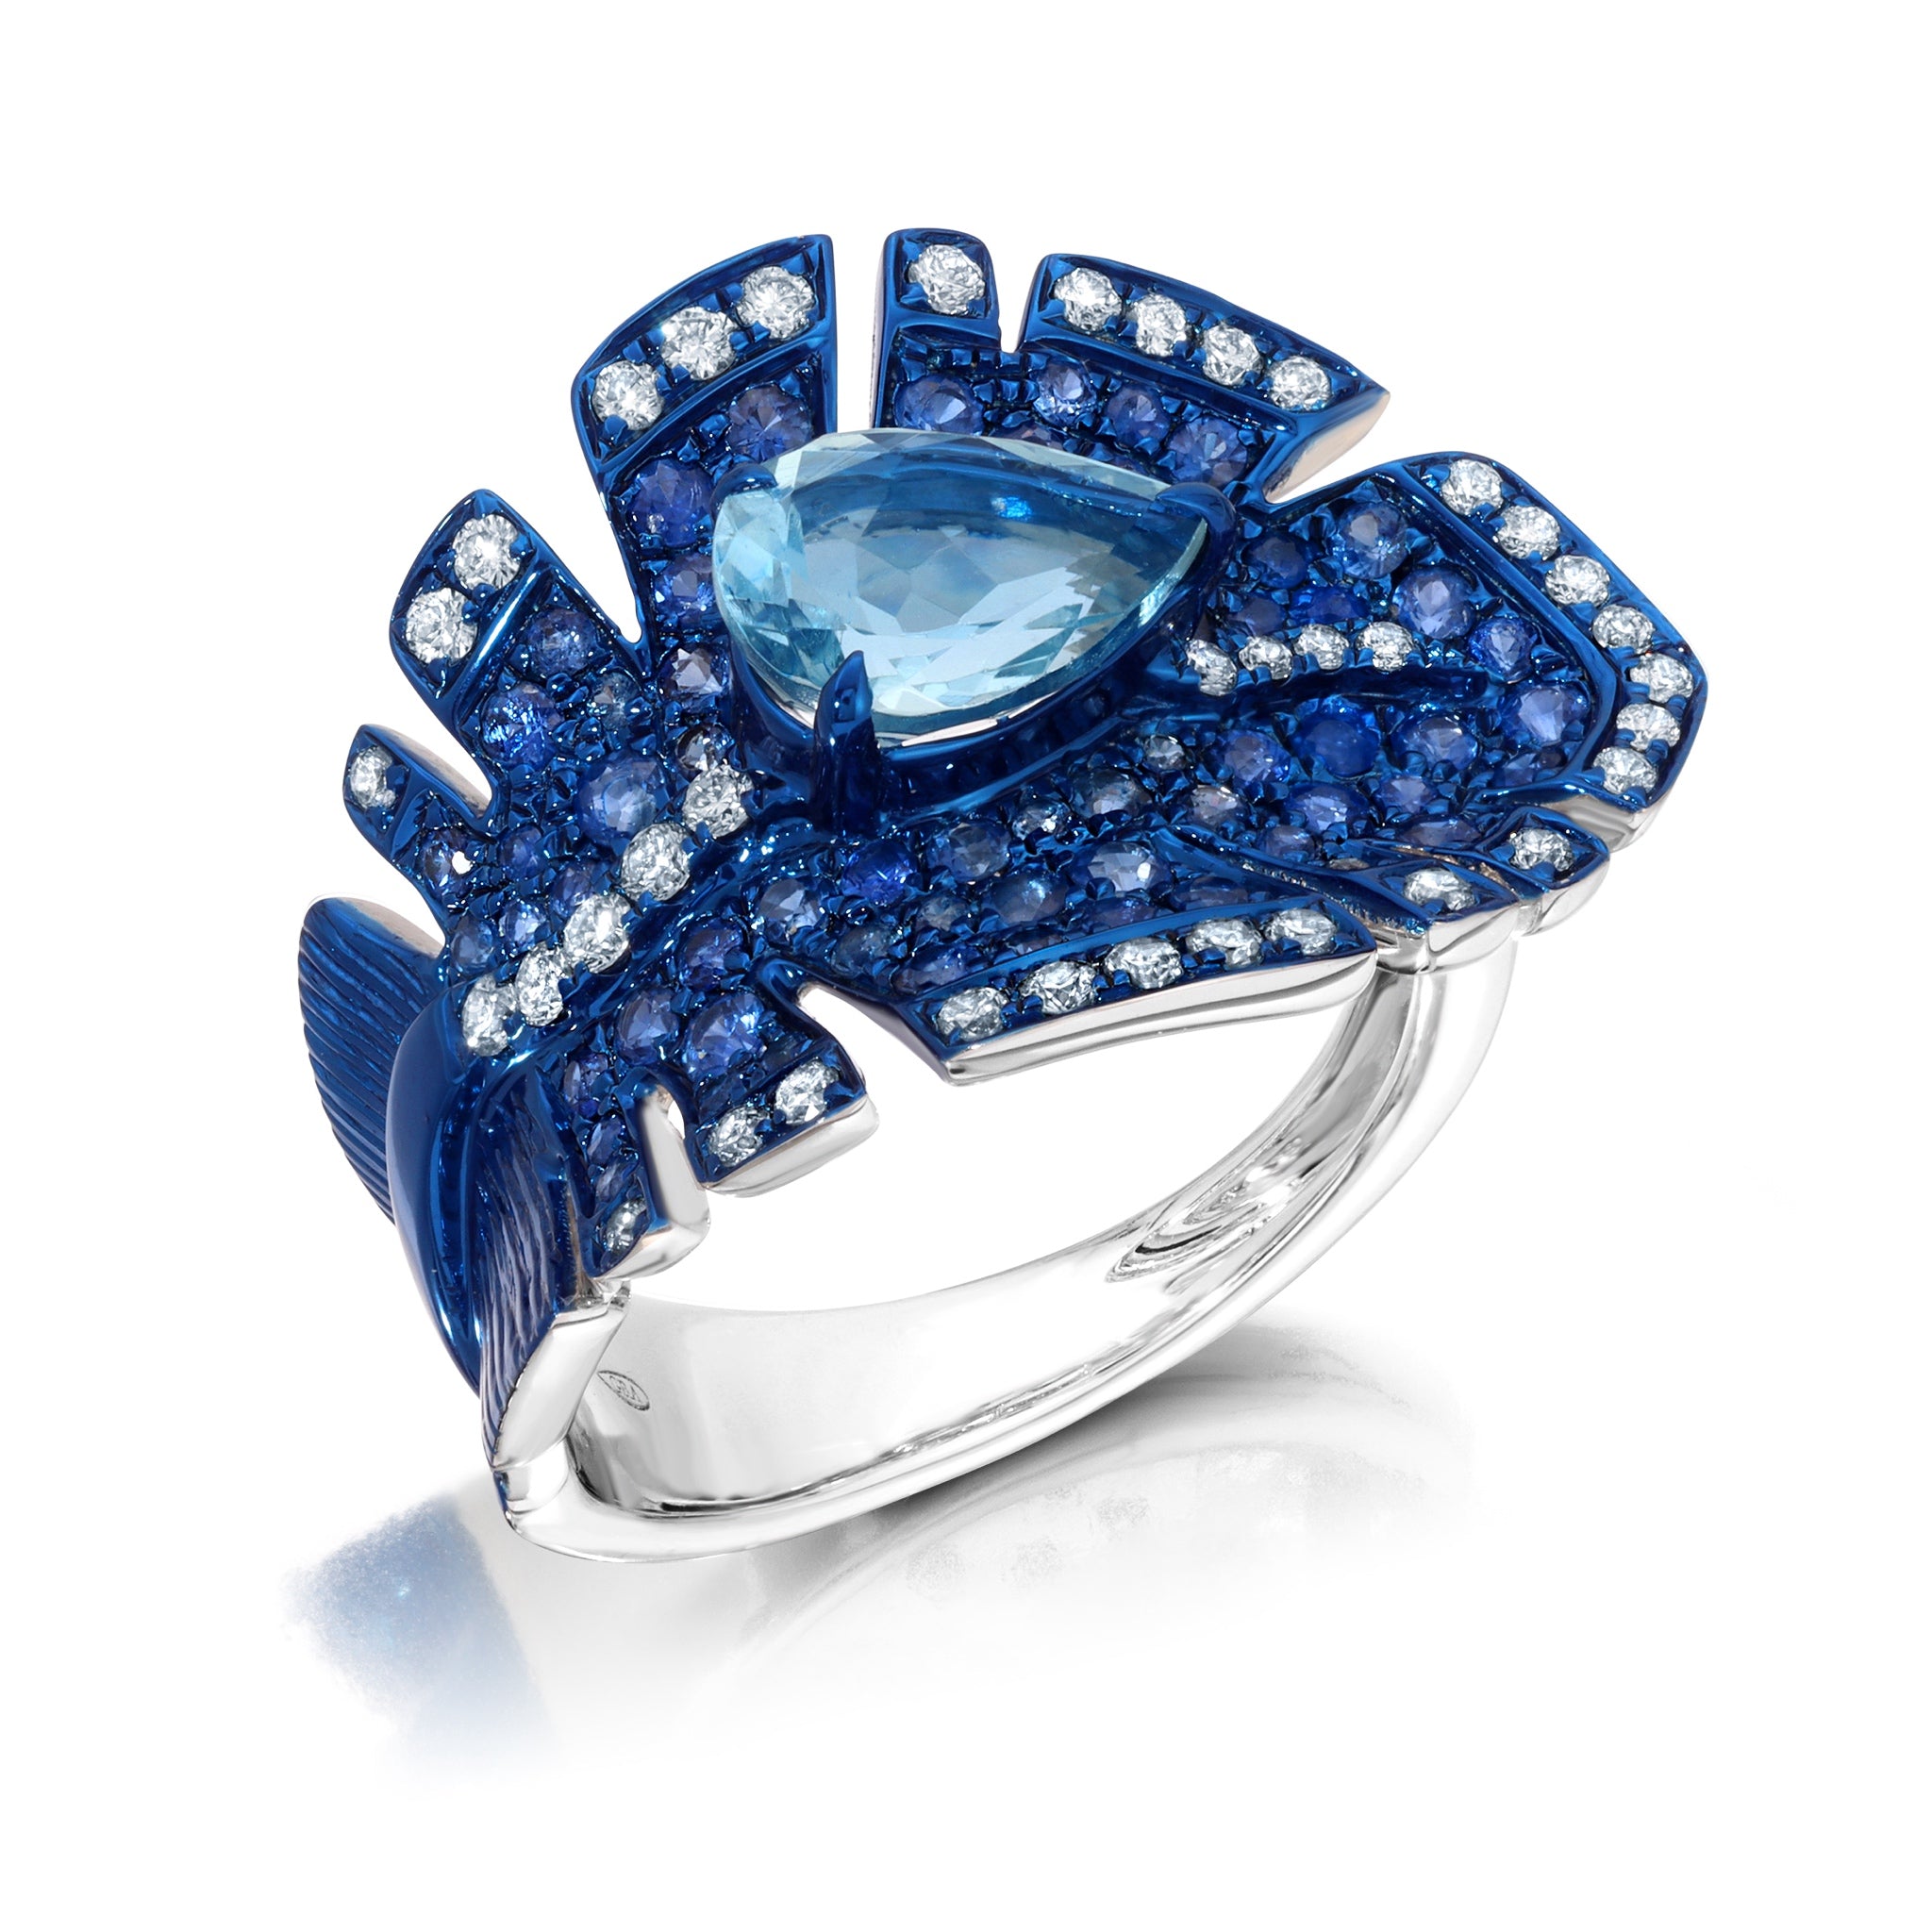 Aquamarine & Blue Sapphire Folha Ring